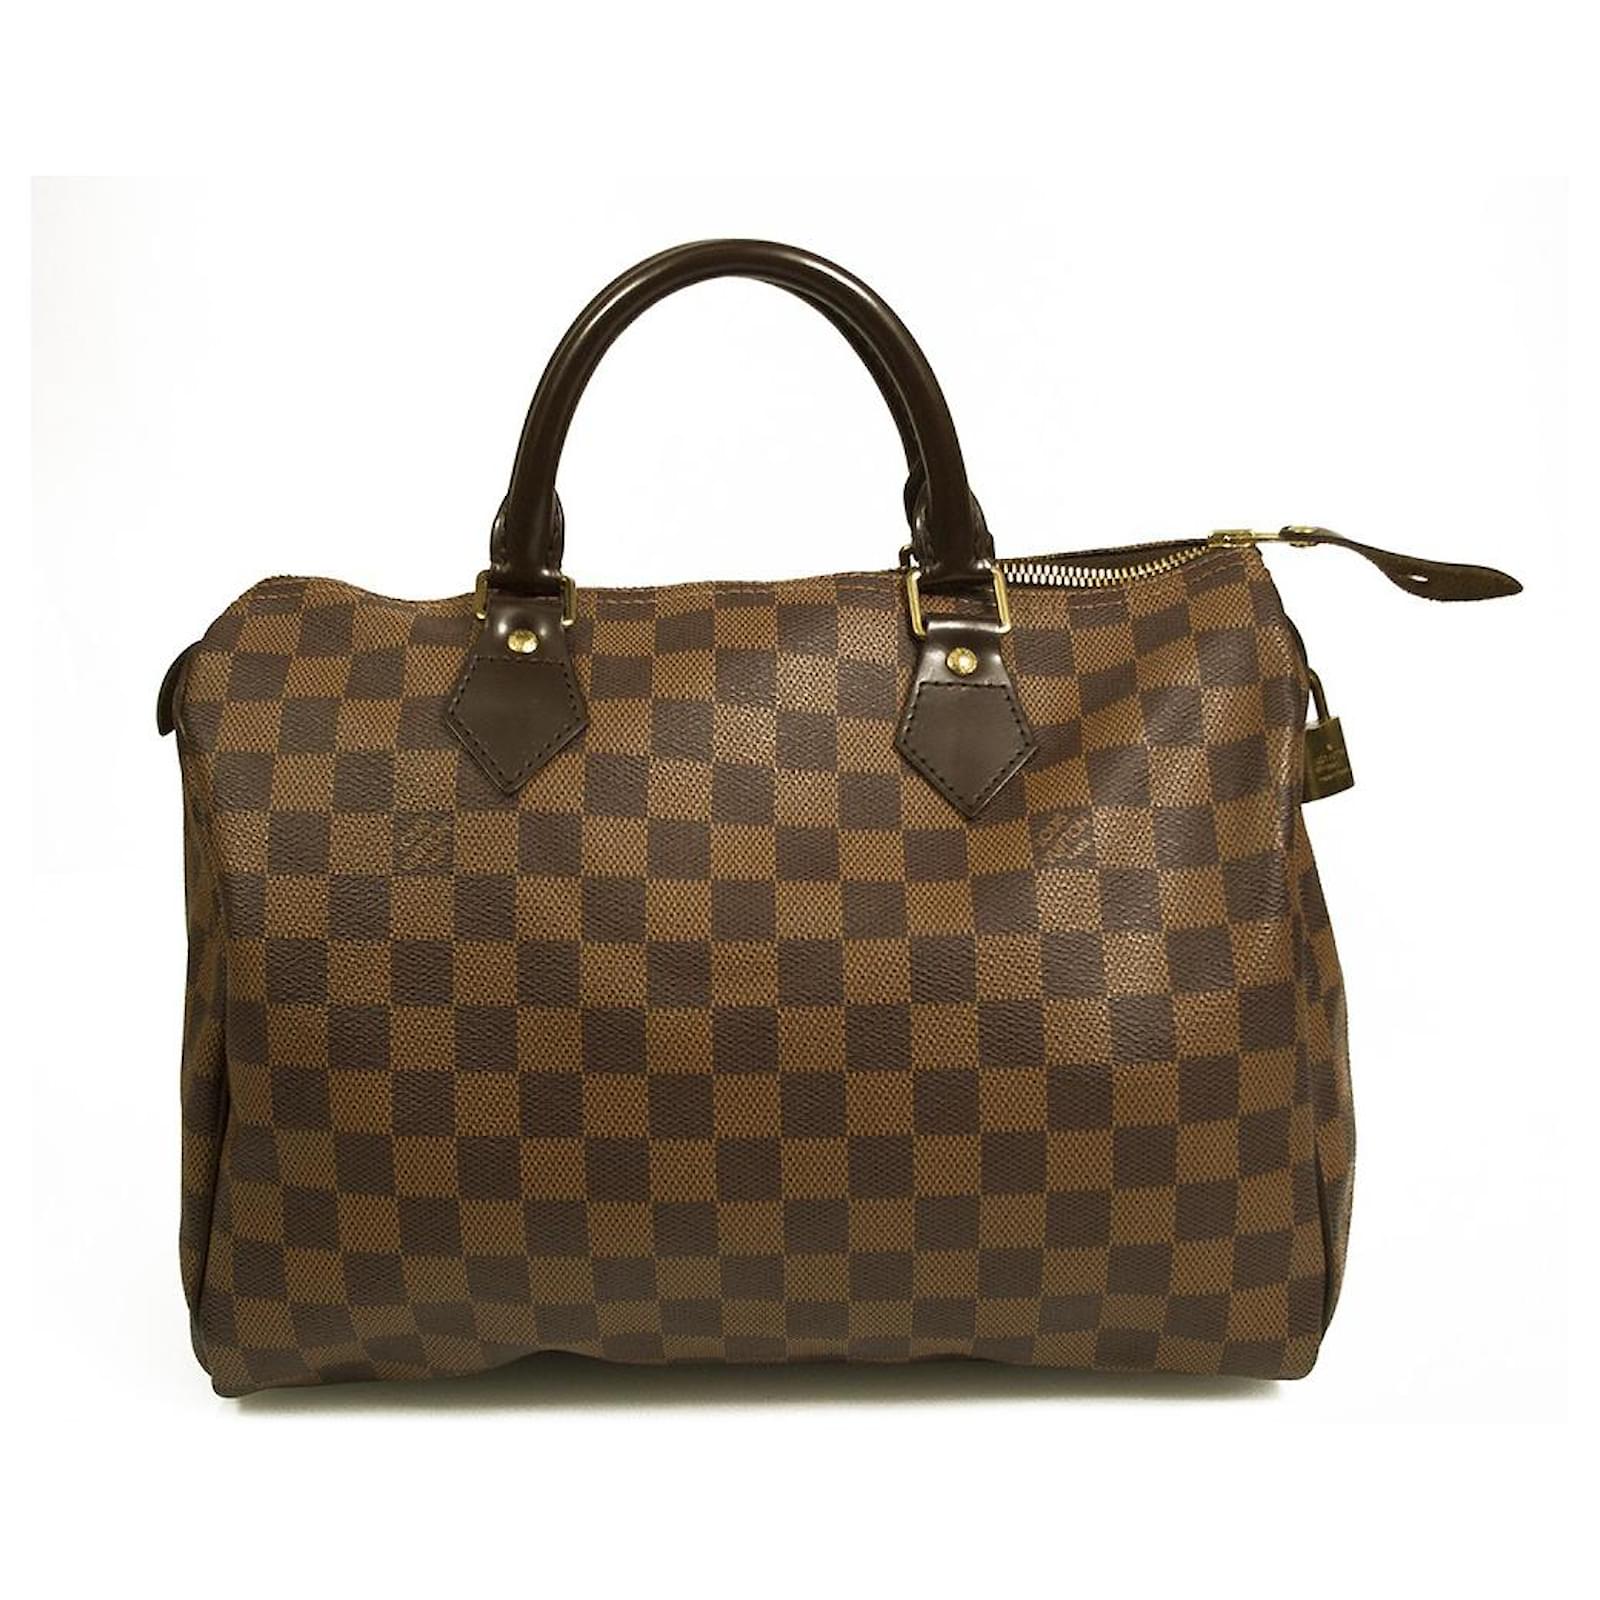 Louis Vuitton Speedy 35 Handbag in Ebene Damier Canvas and Brown